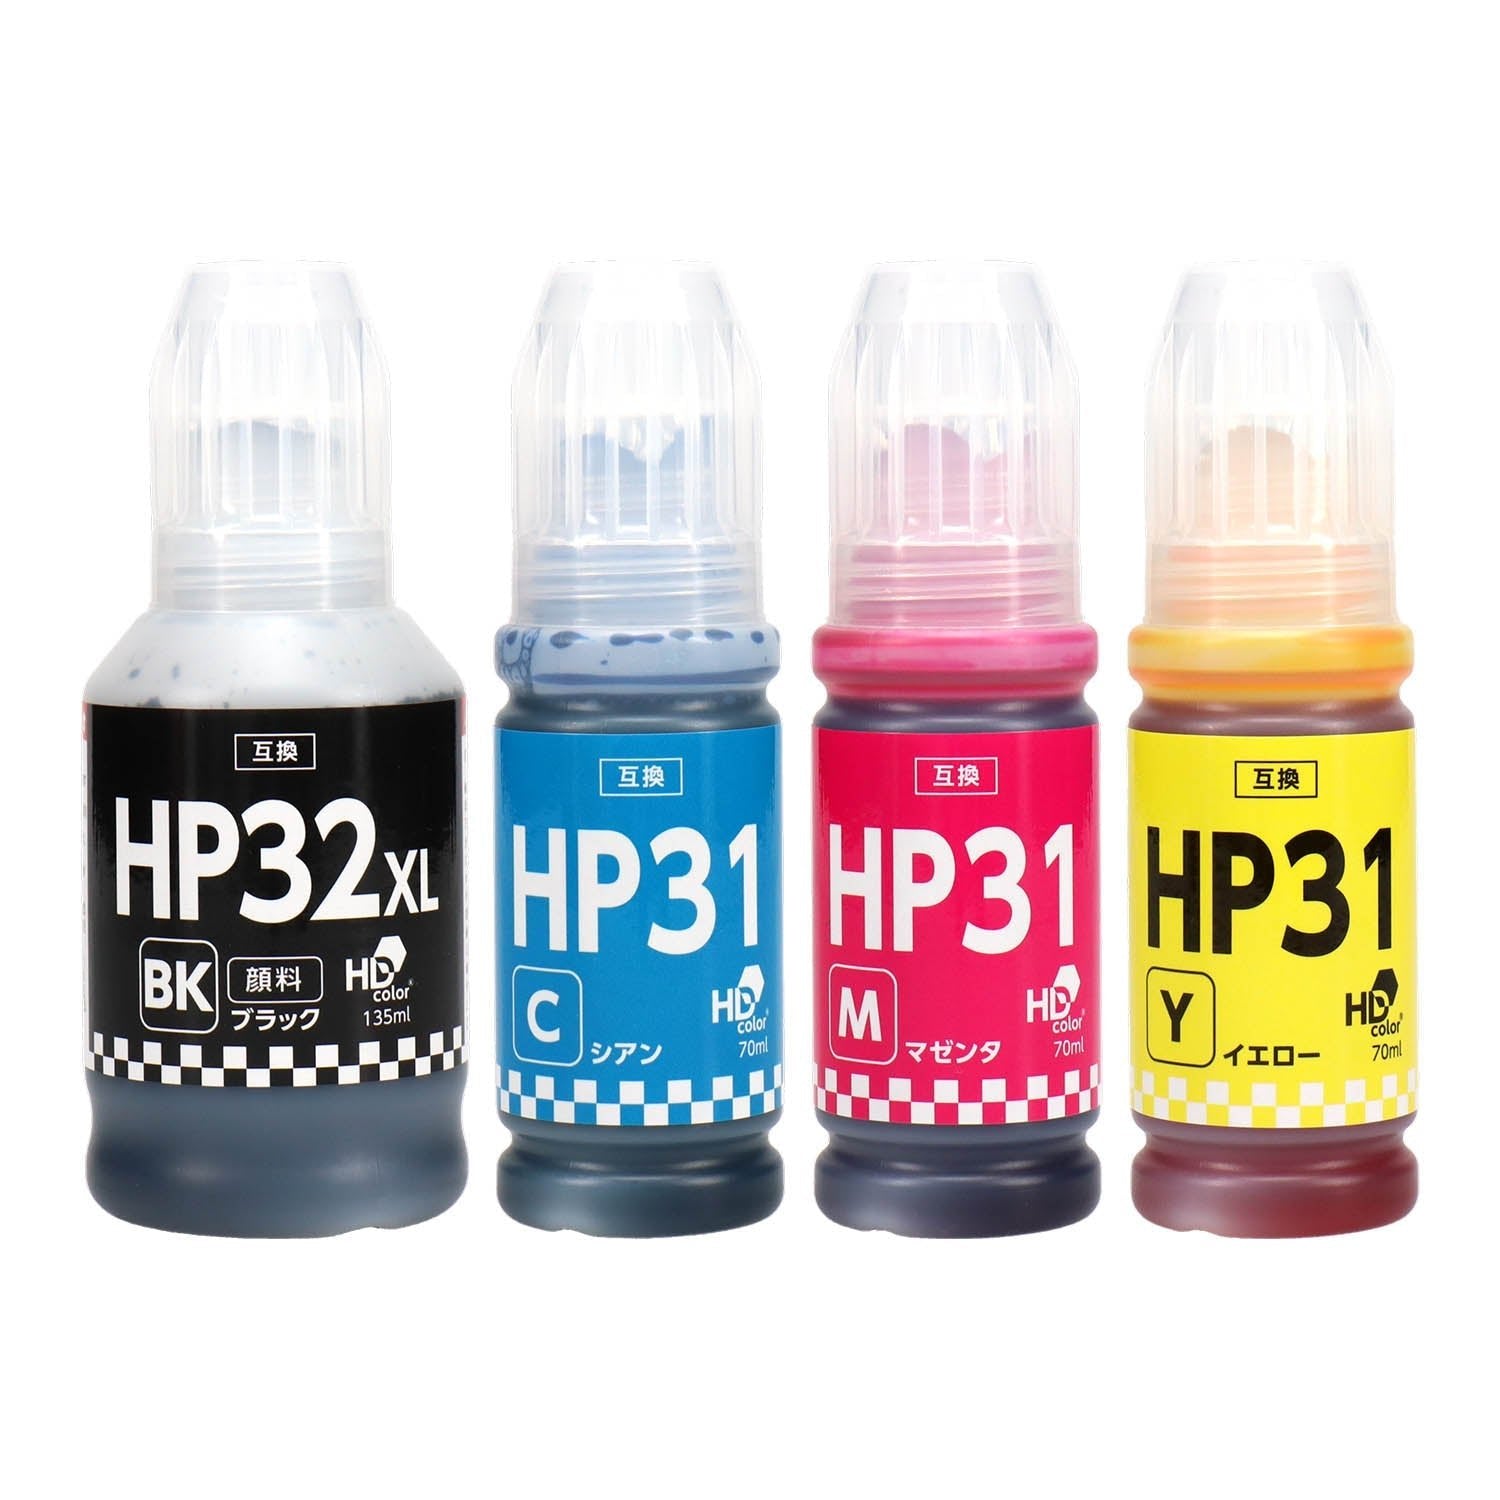 HP用 HP31/32 互換インクボトル 4色セット